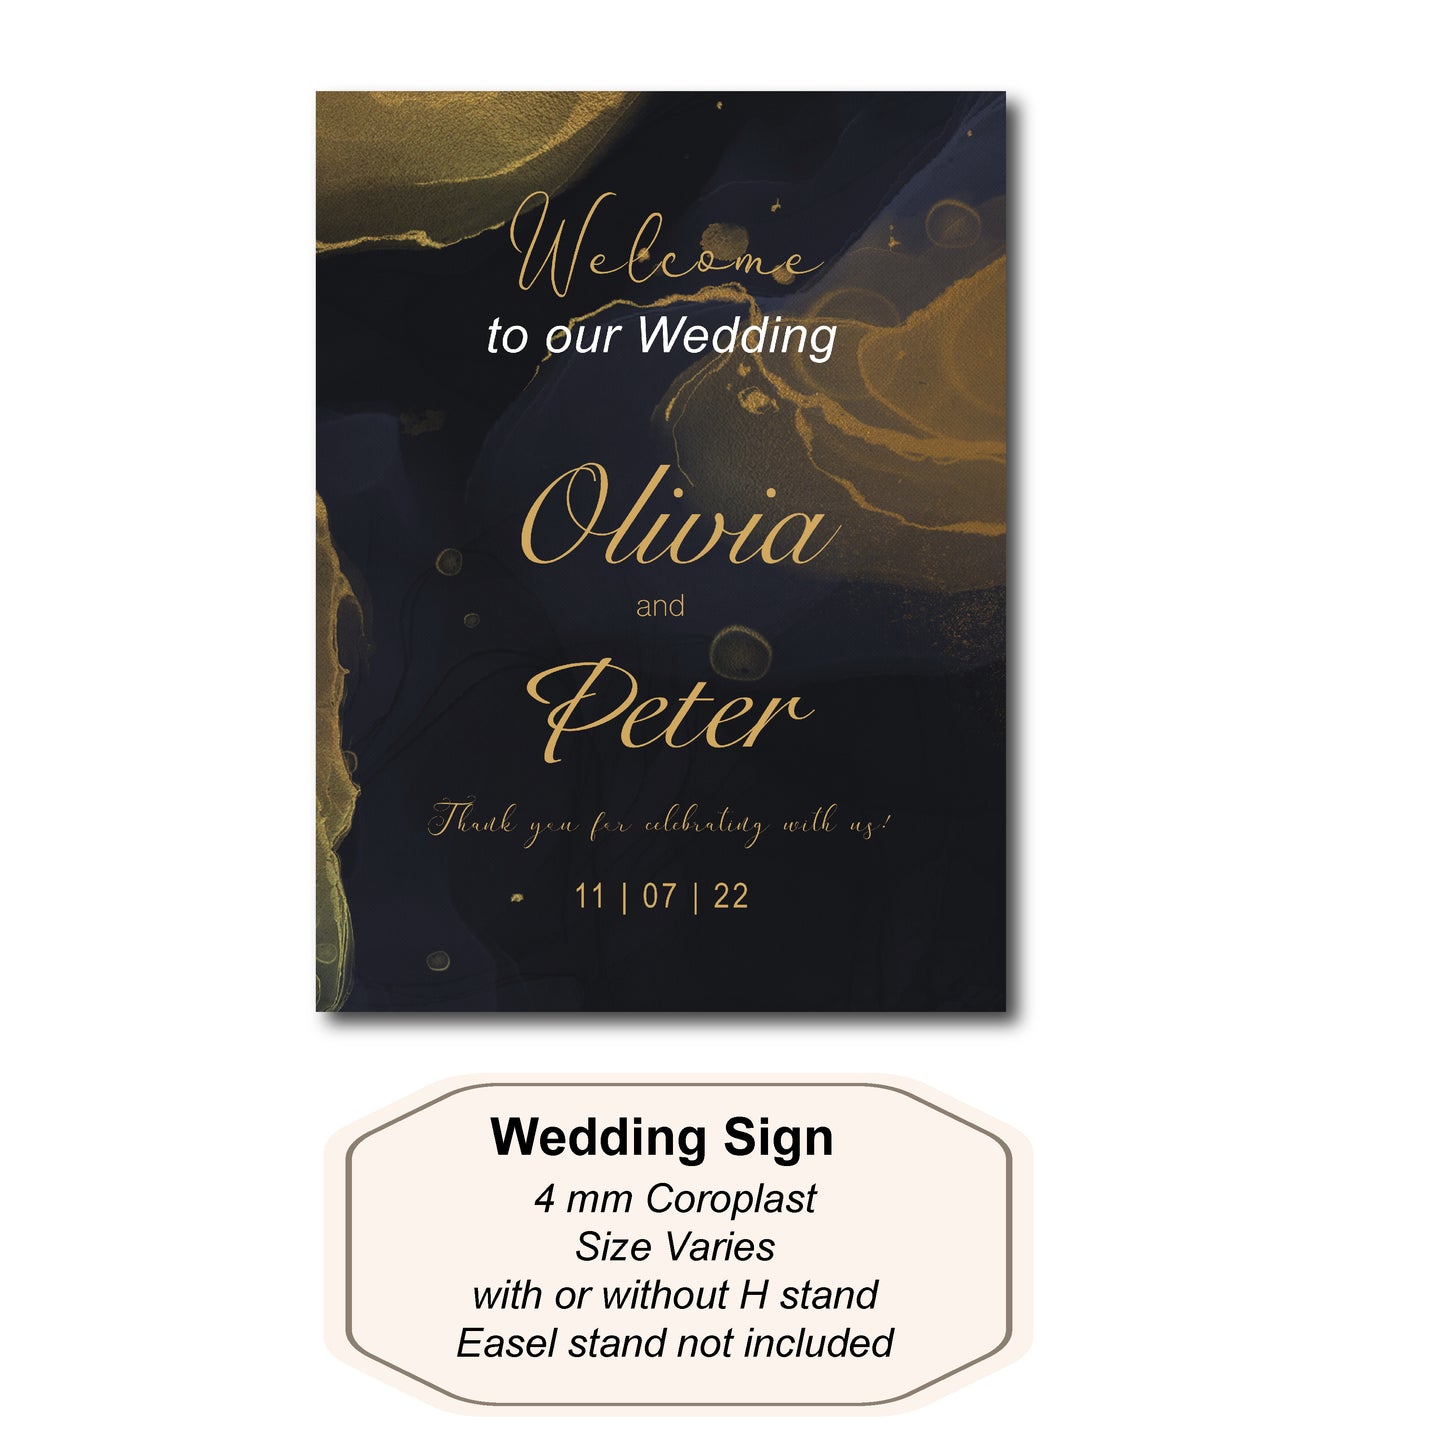 Elegant Pastel Green, Wedding Signs, 18X24 Wedding Signage Wedding Sign in Board, Wedding Welcome Sign, Custom Made Elegant Beautiful Wedding Sign Ideas